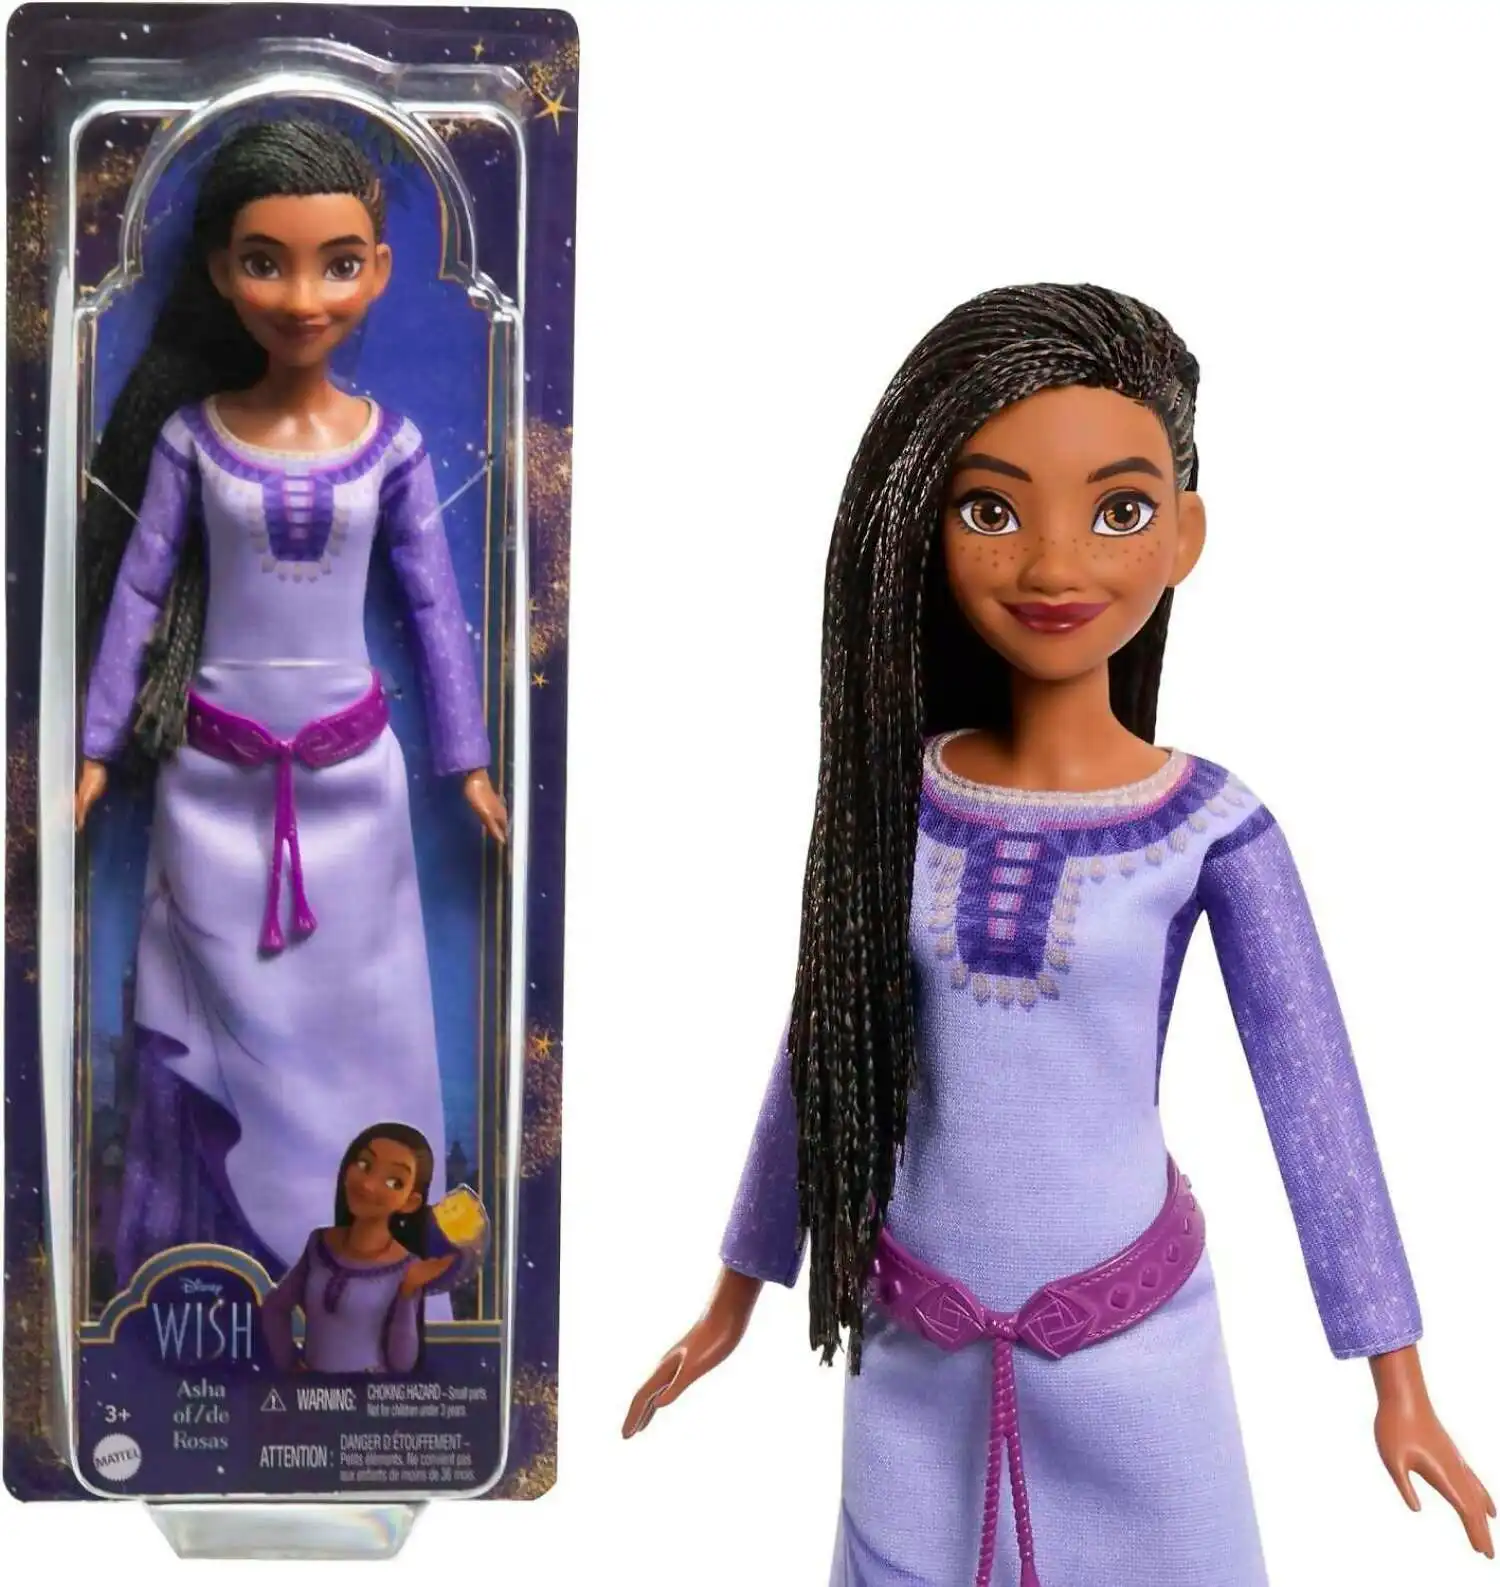 Disney Wish - Asha Of Rosas Posable Fashion Doll - Mattel